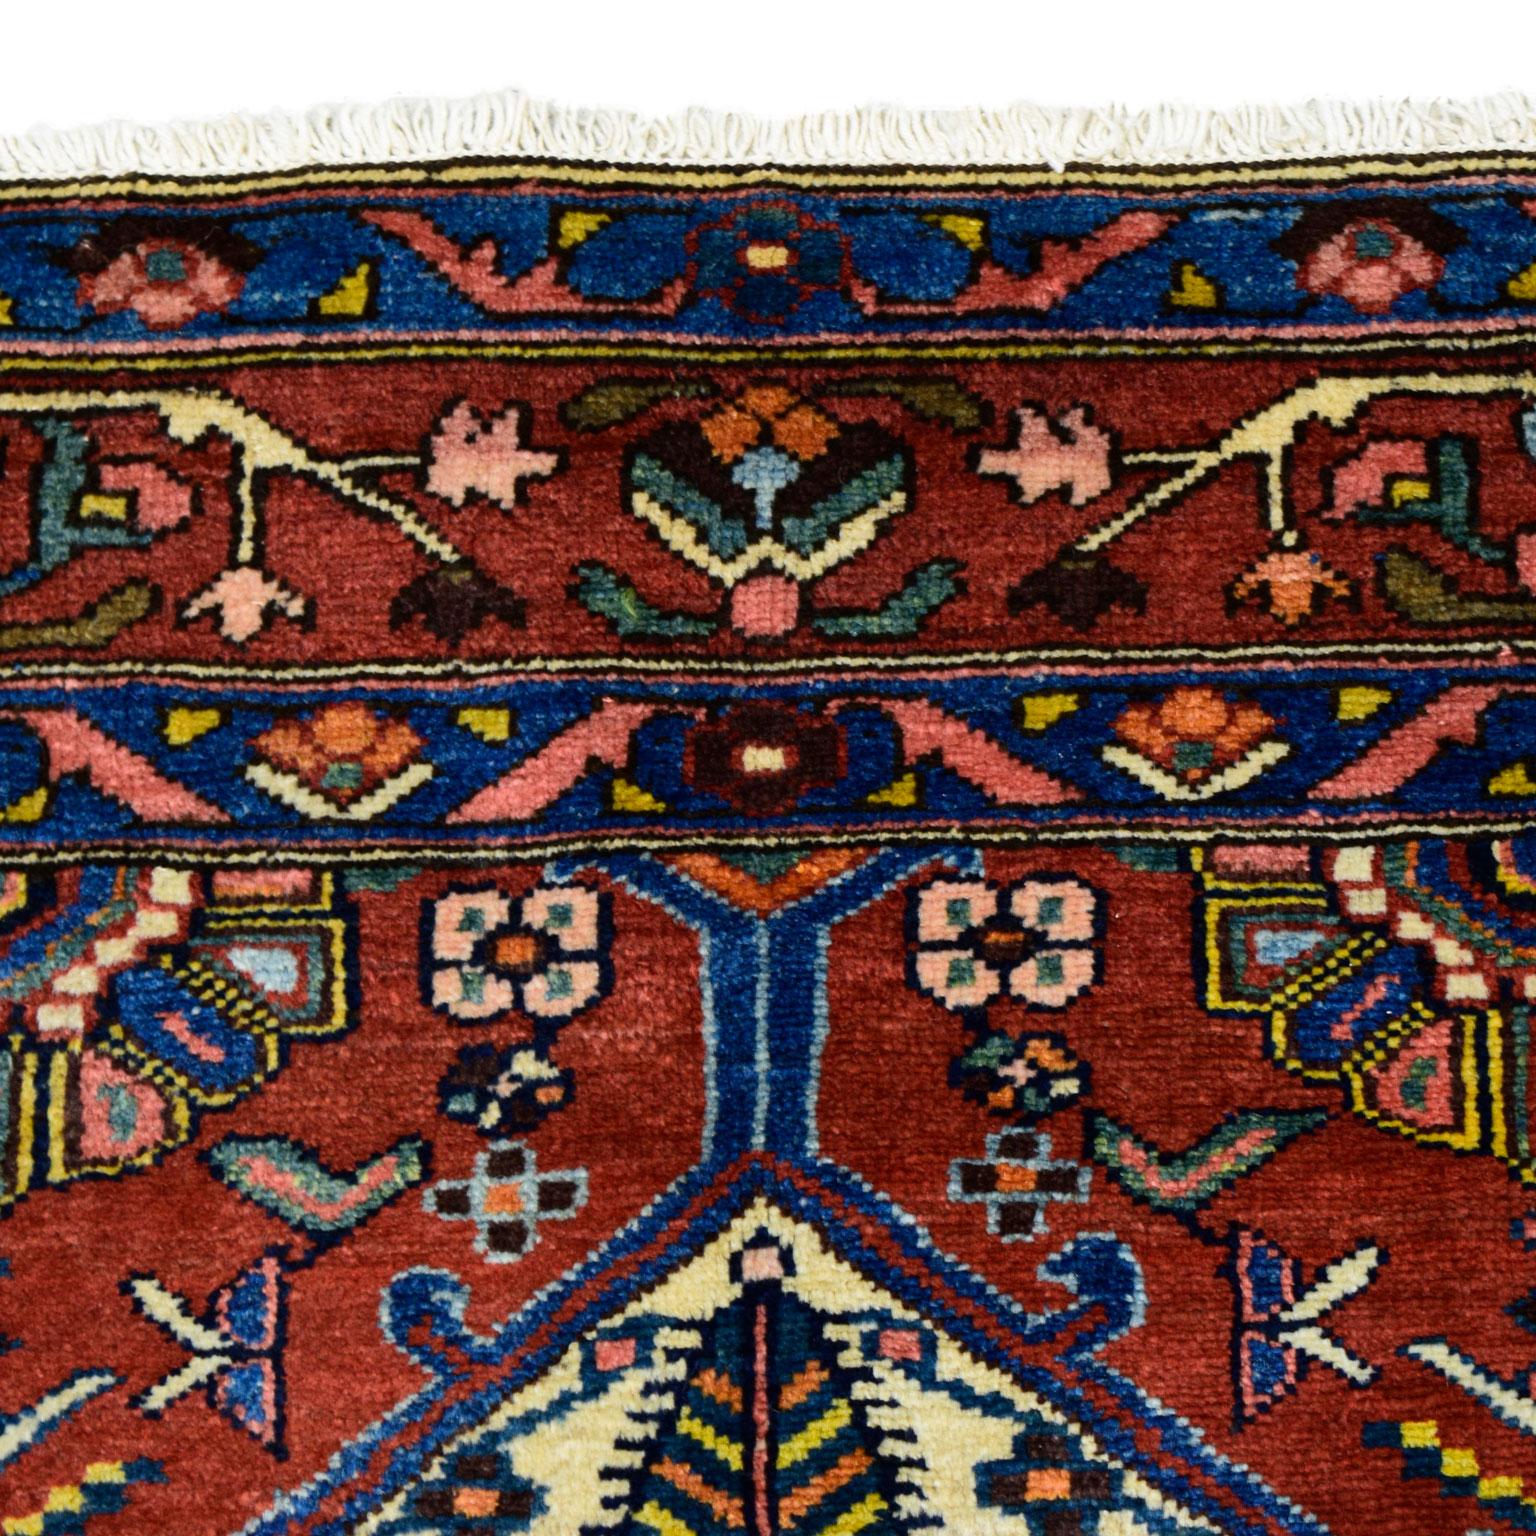 Antique 1920s Wool Persian Bakhtiari Rug, Classic Lozenge Design, 5' x 7' For Sale 1